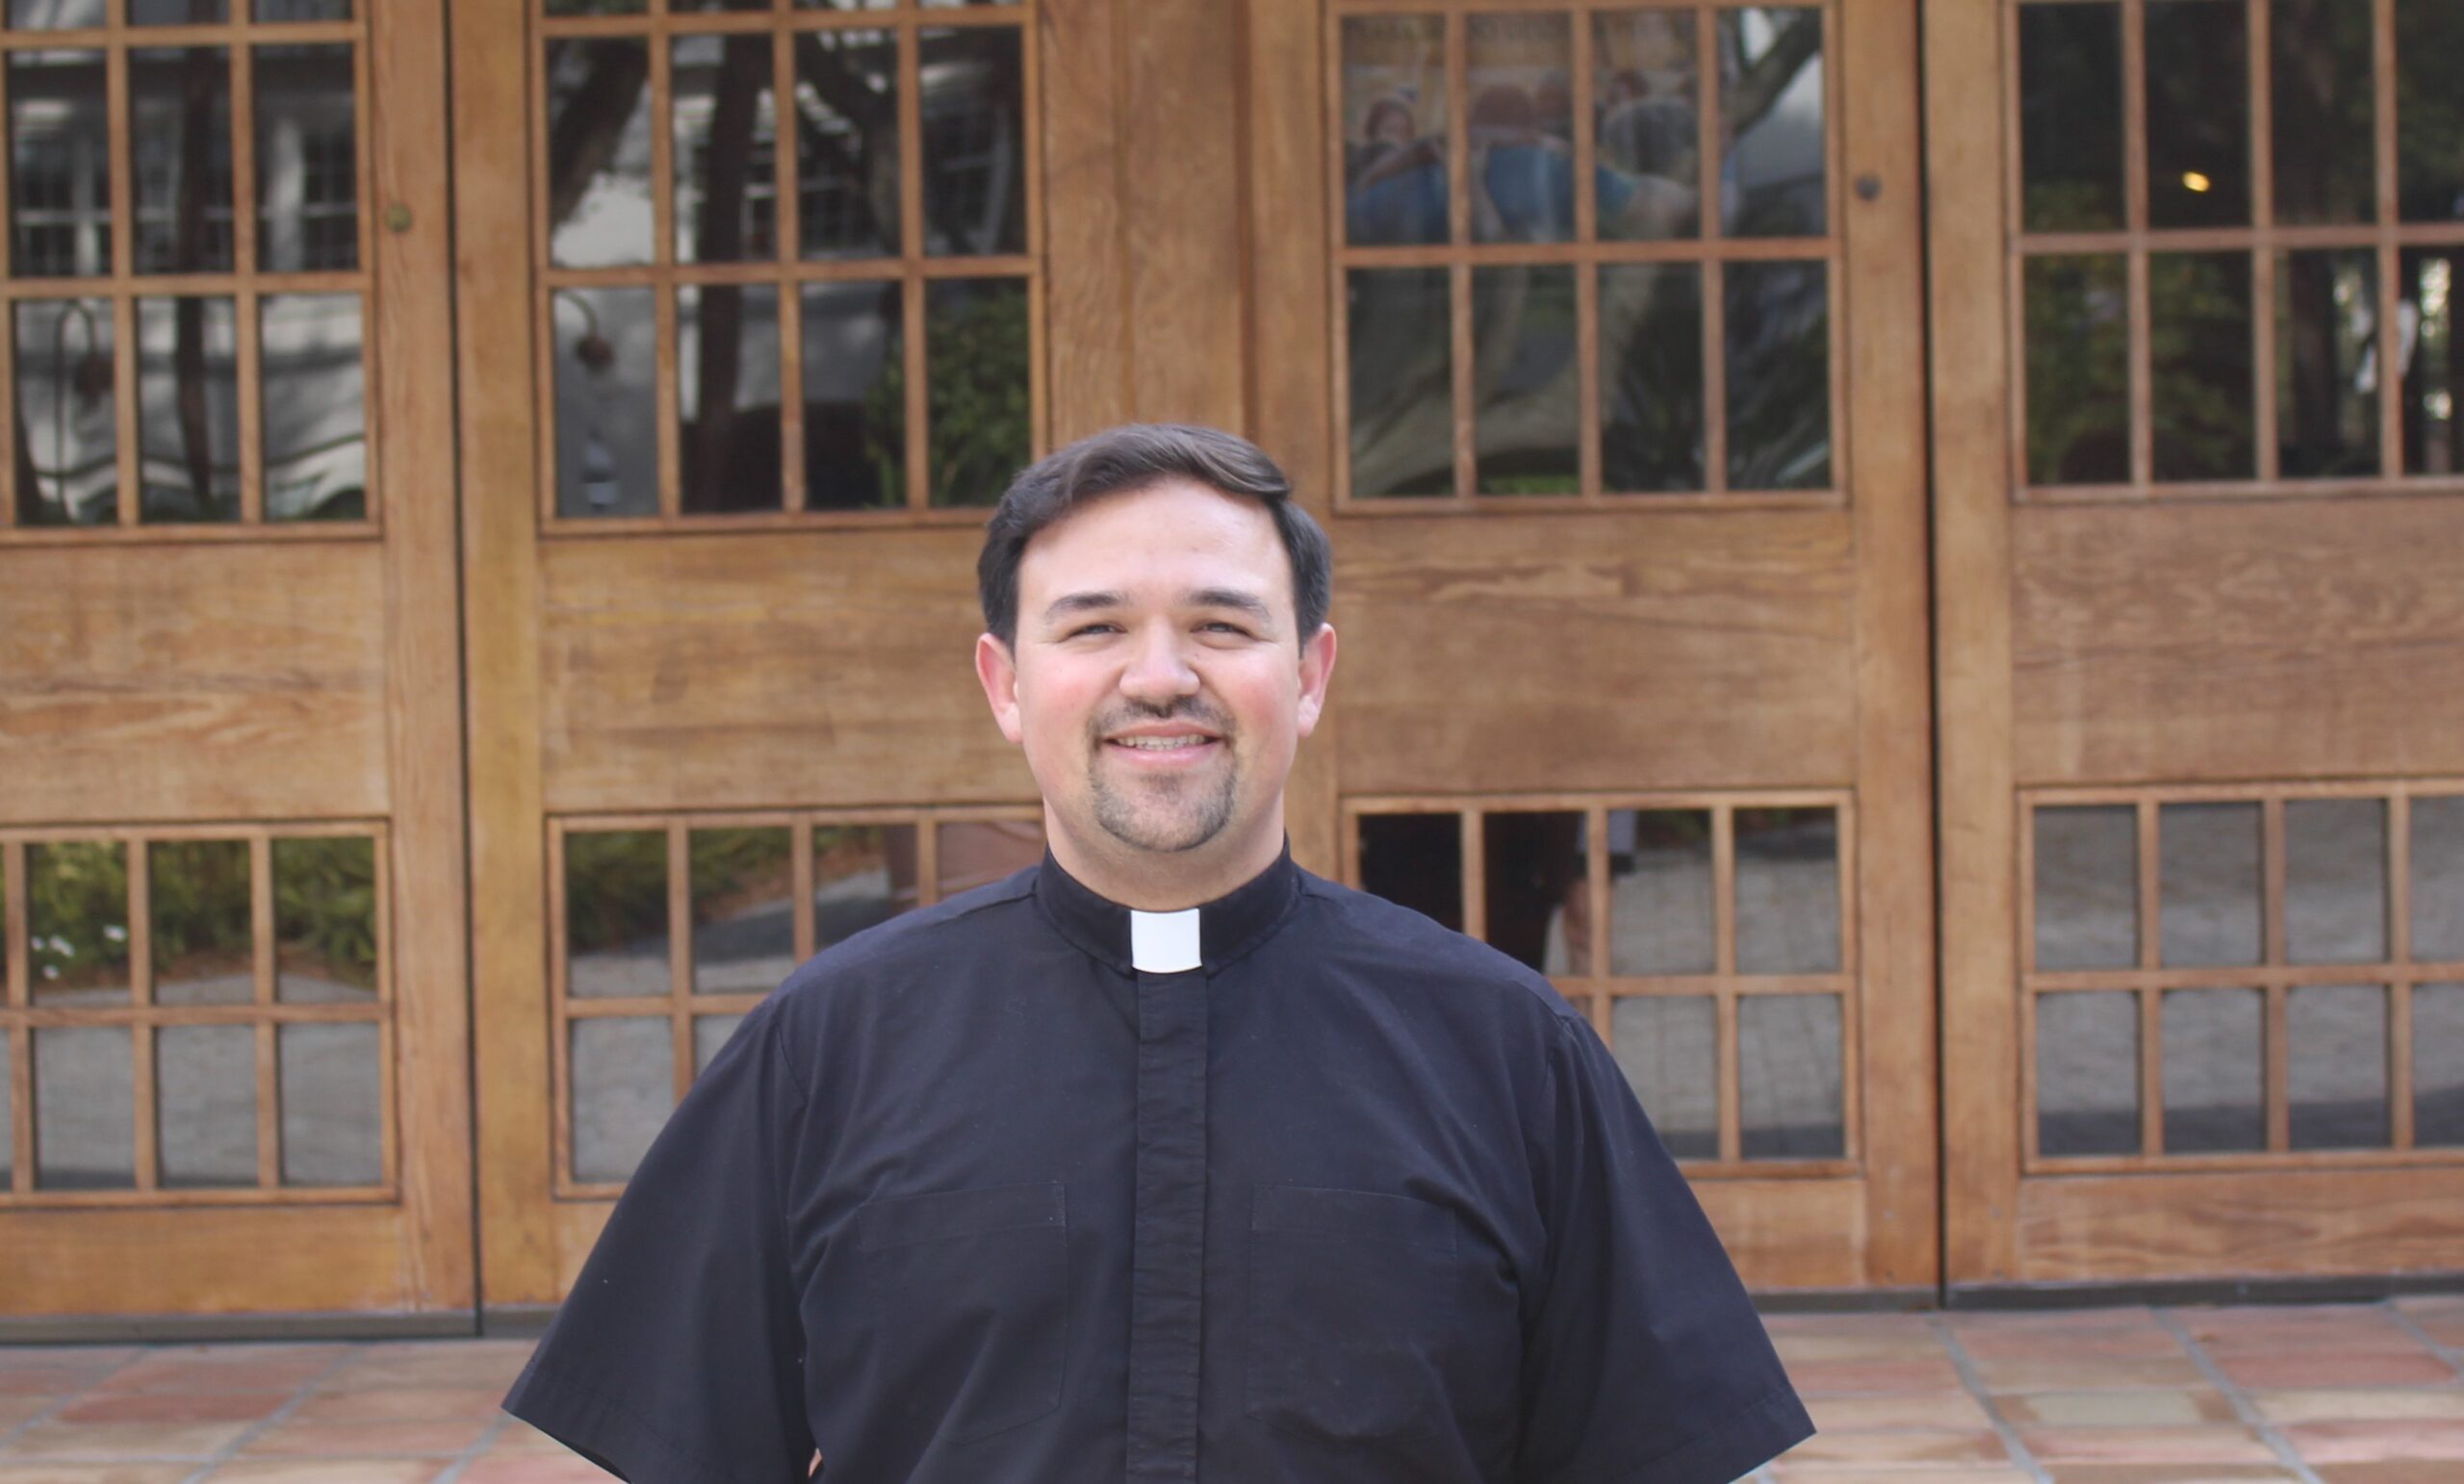 Father Xavy Castro